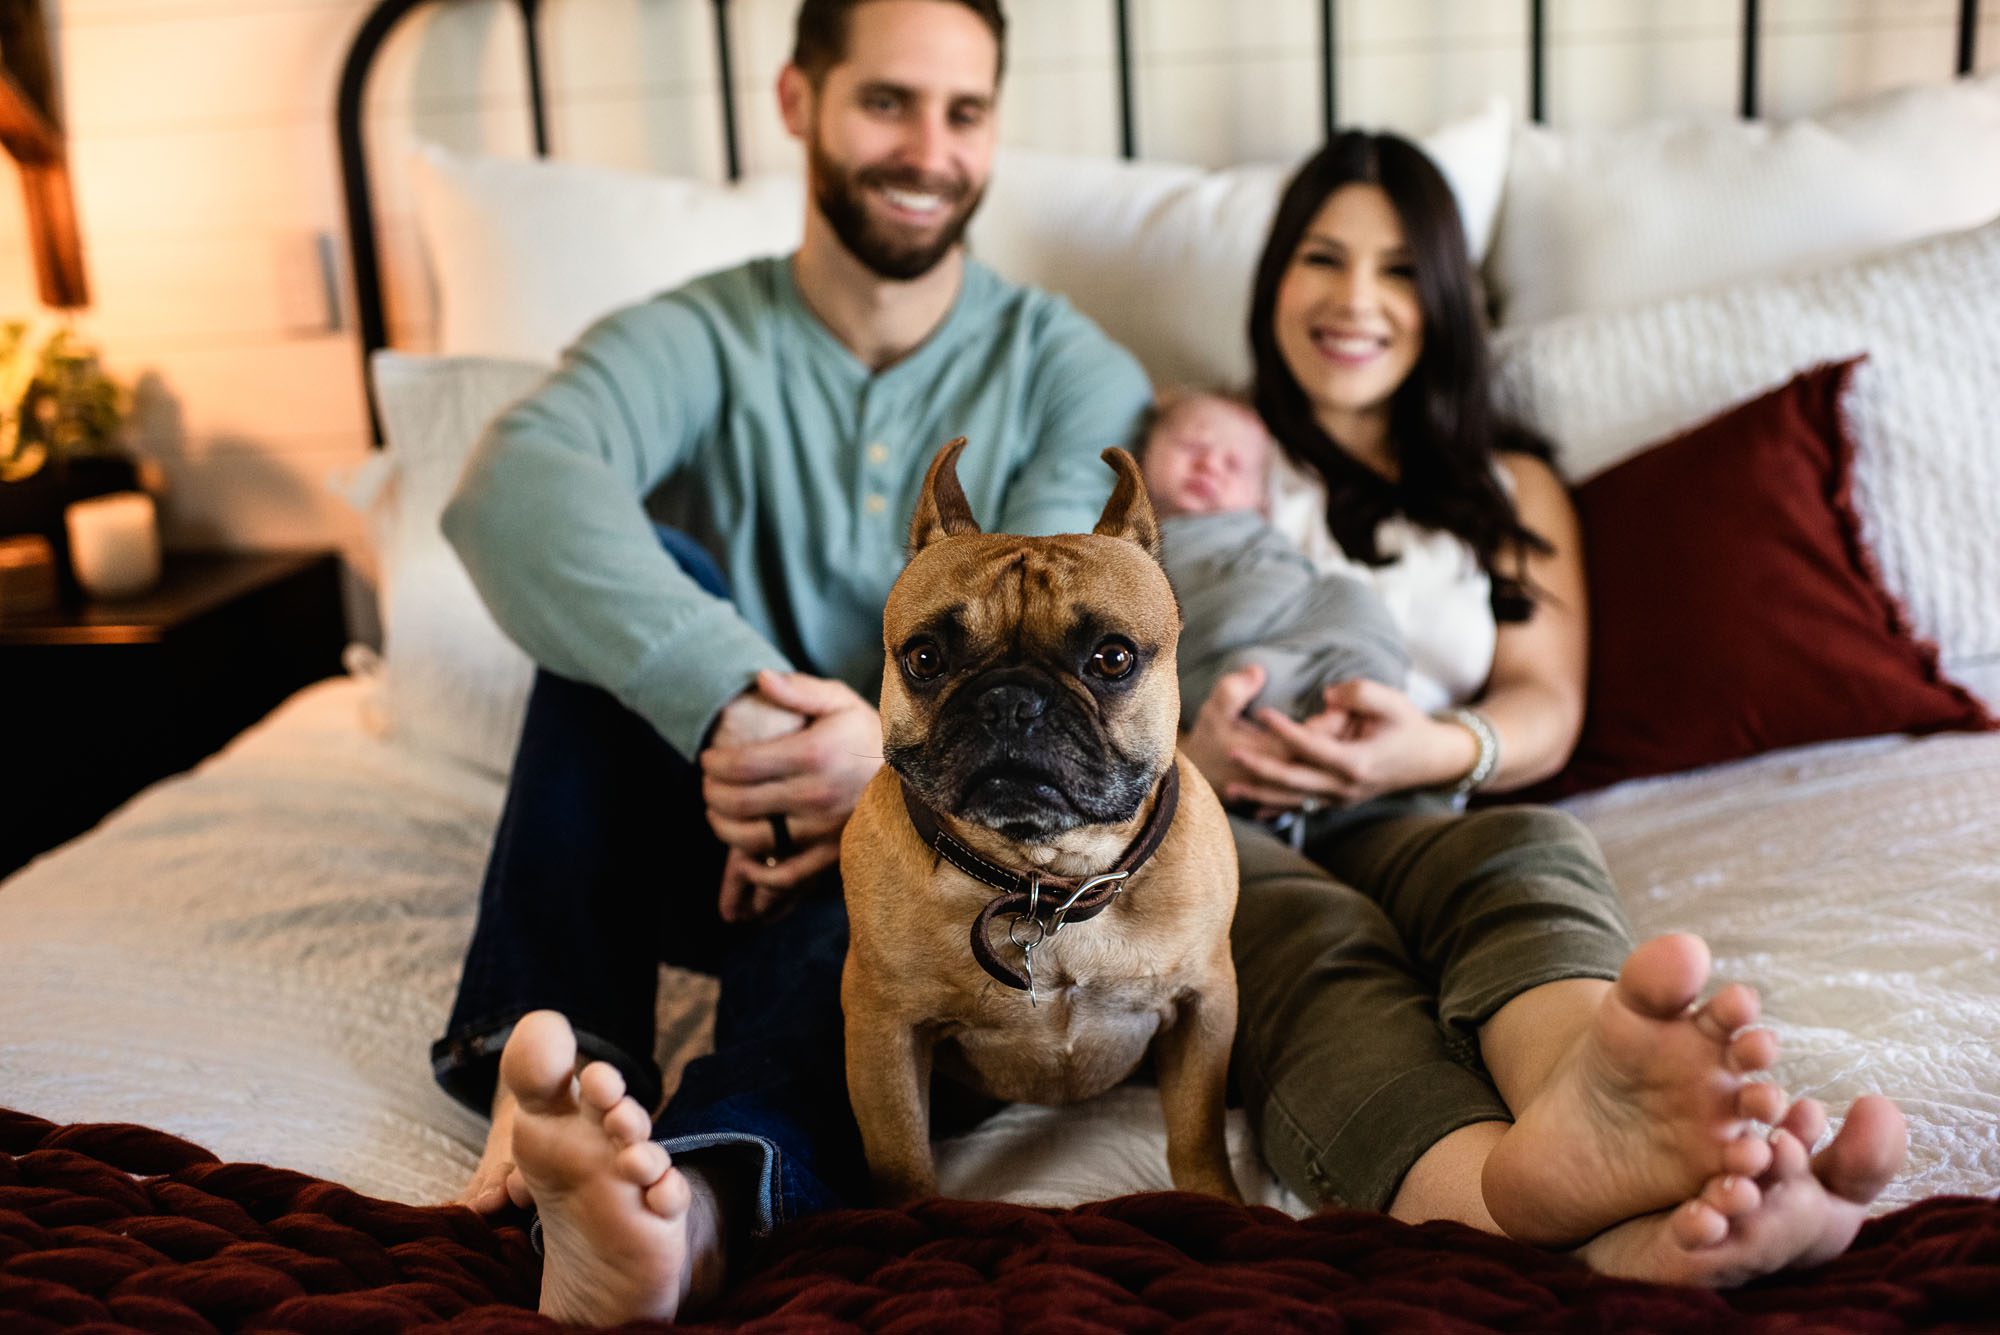 San Antonio Newborn Photographer, Couple holding newborn baby on bed with dog